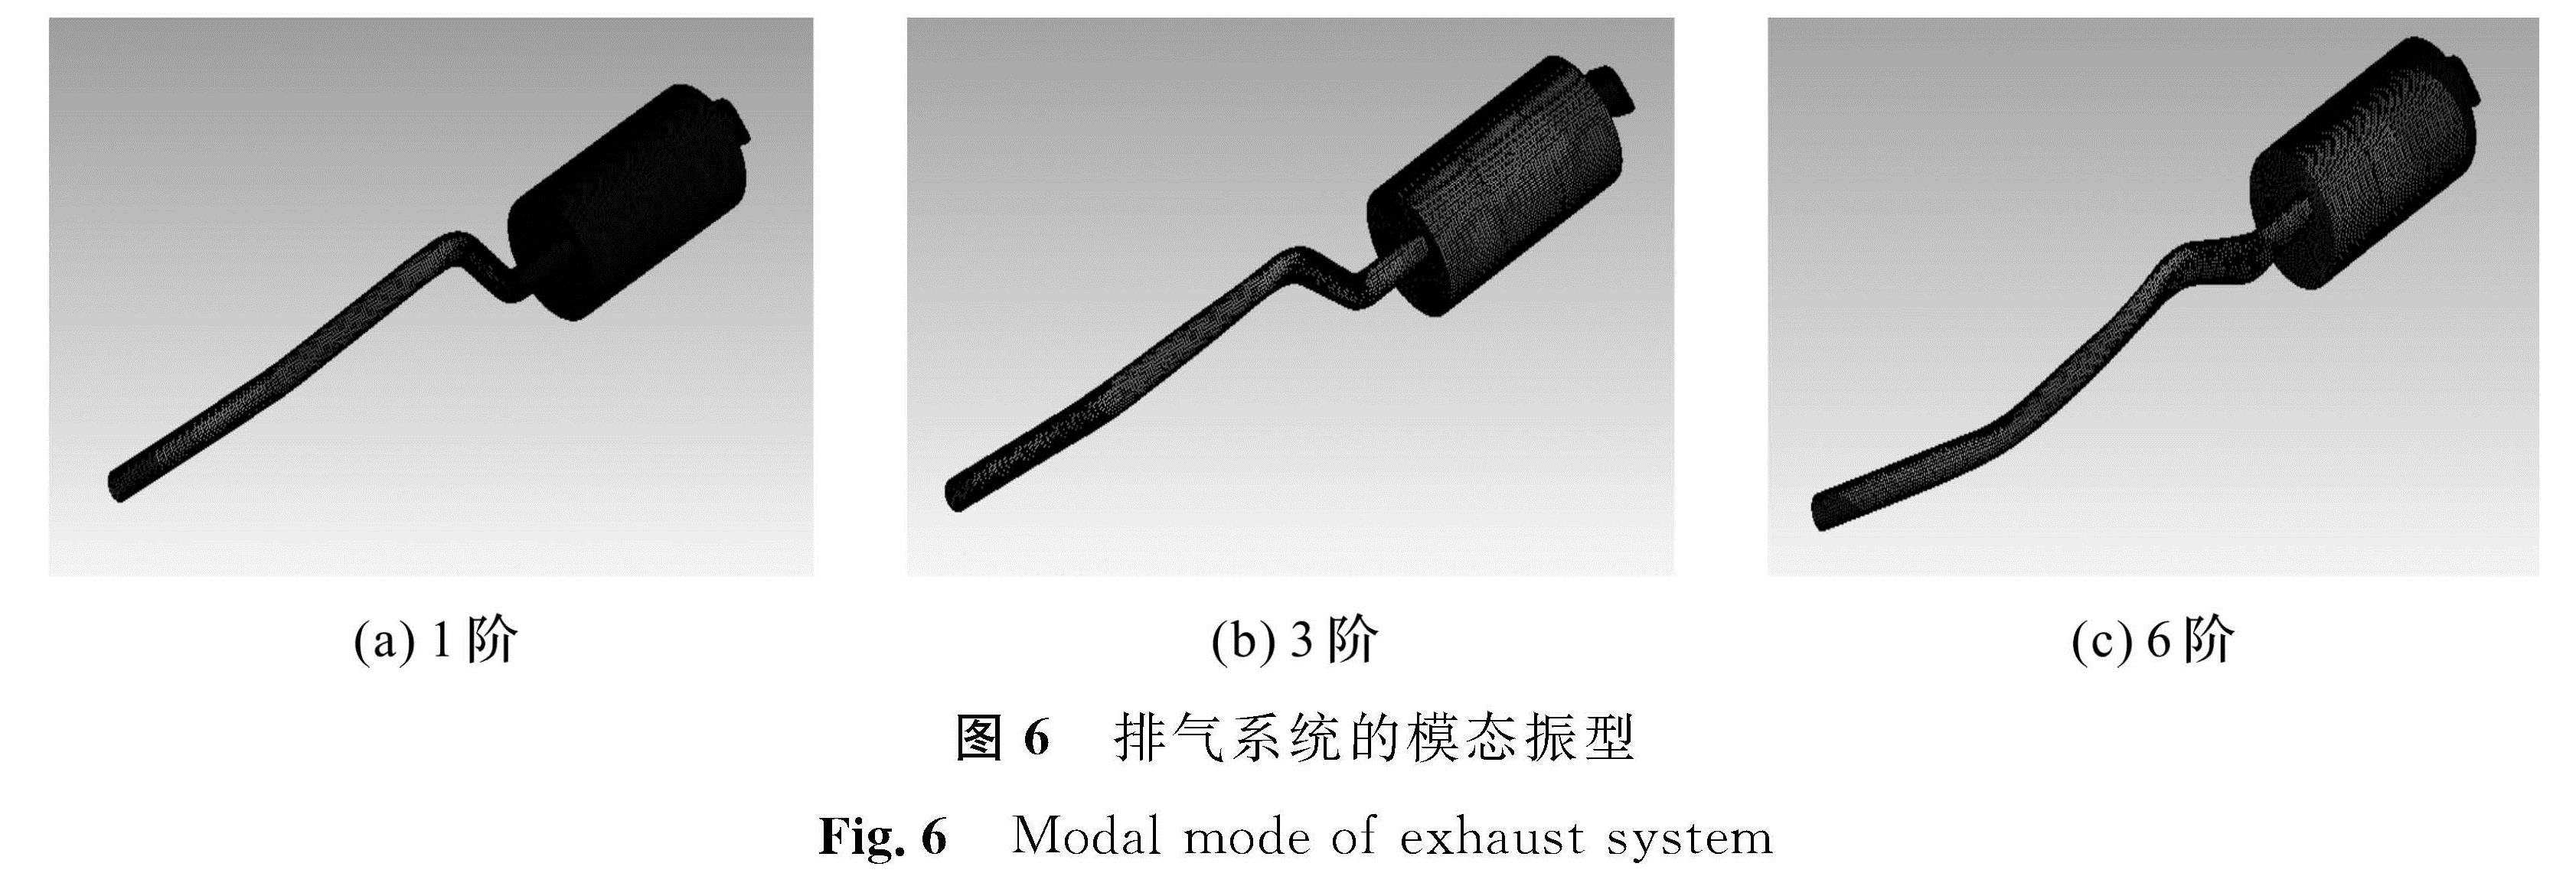 图6 排气系统的模态振型<br/>Fig.6 Modal mode of exhaust system